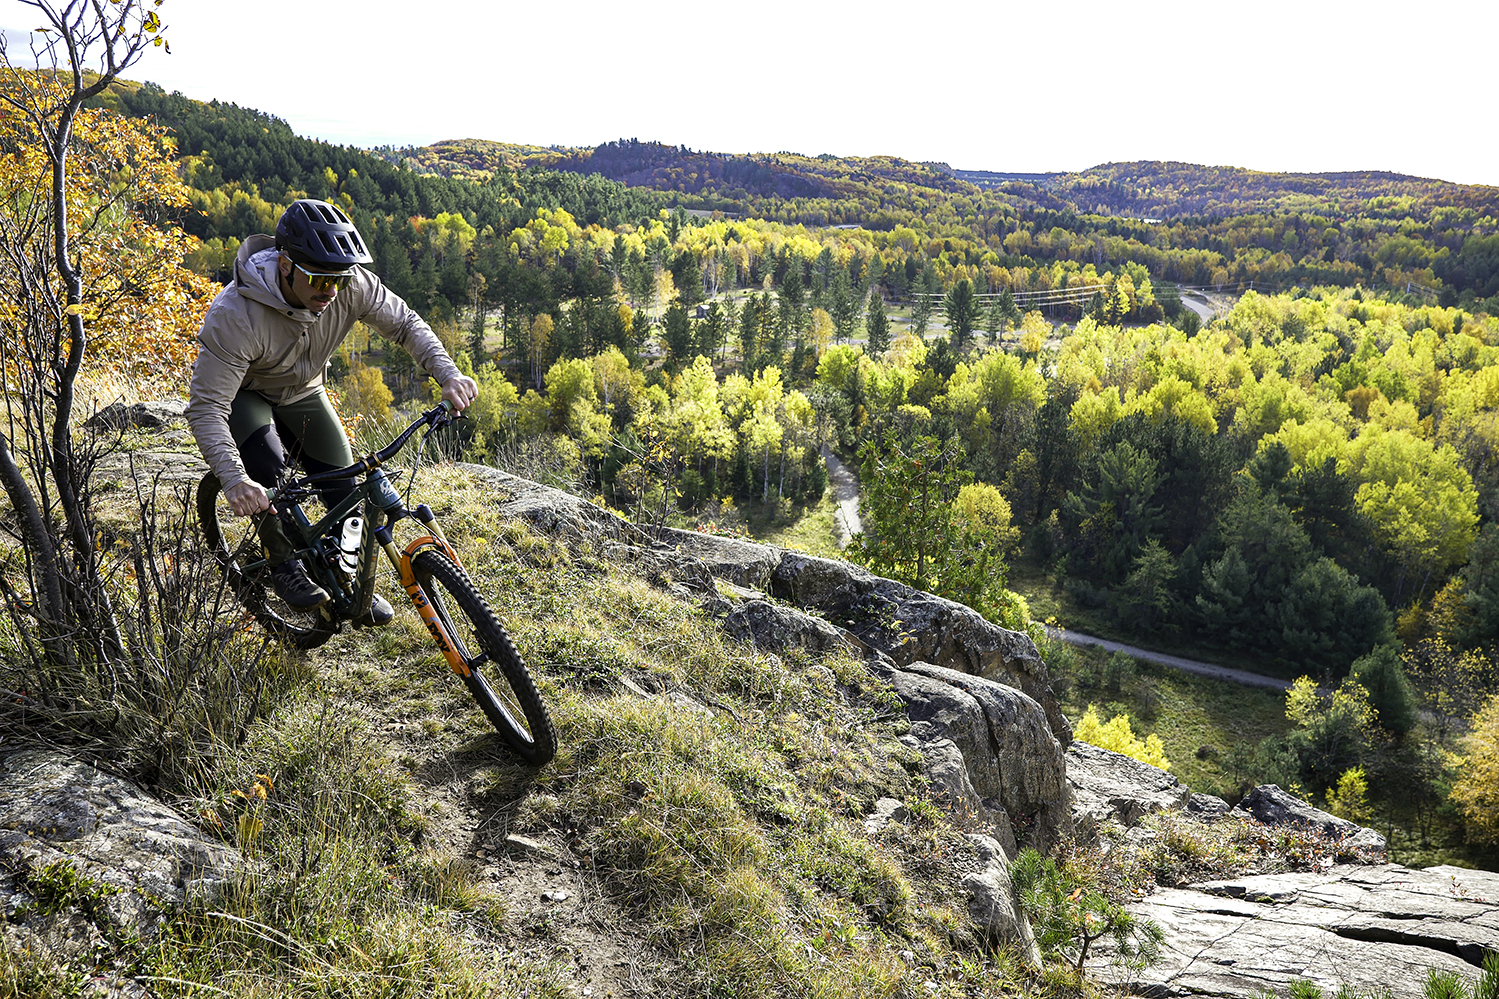 "Brice Shirbach riding a mountain bike along a cliff edge overlooking Autumn colors."